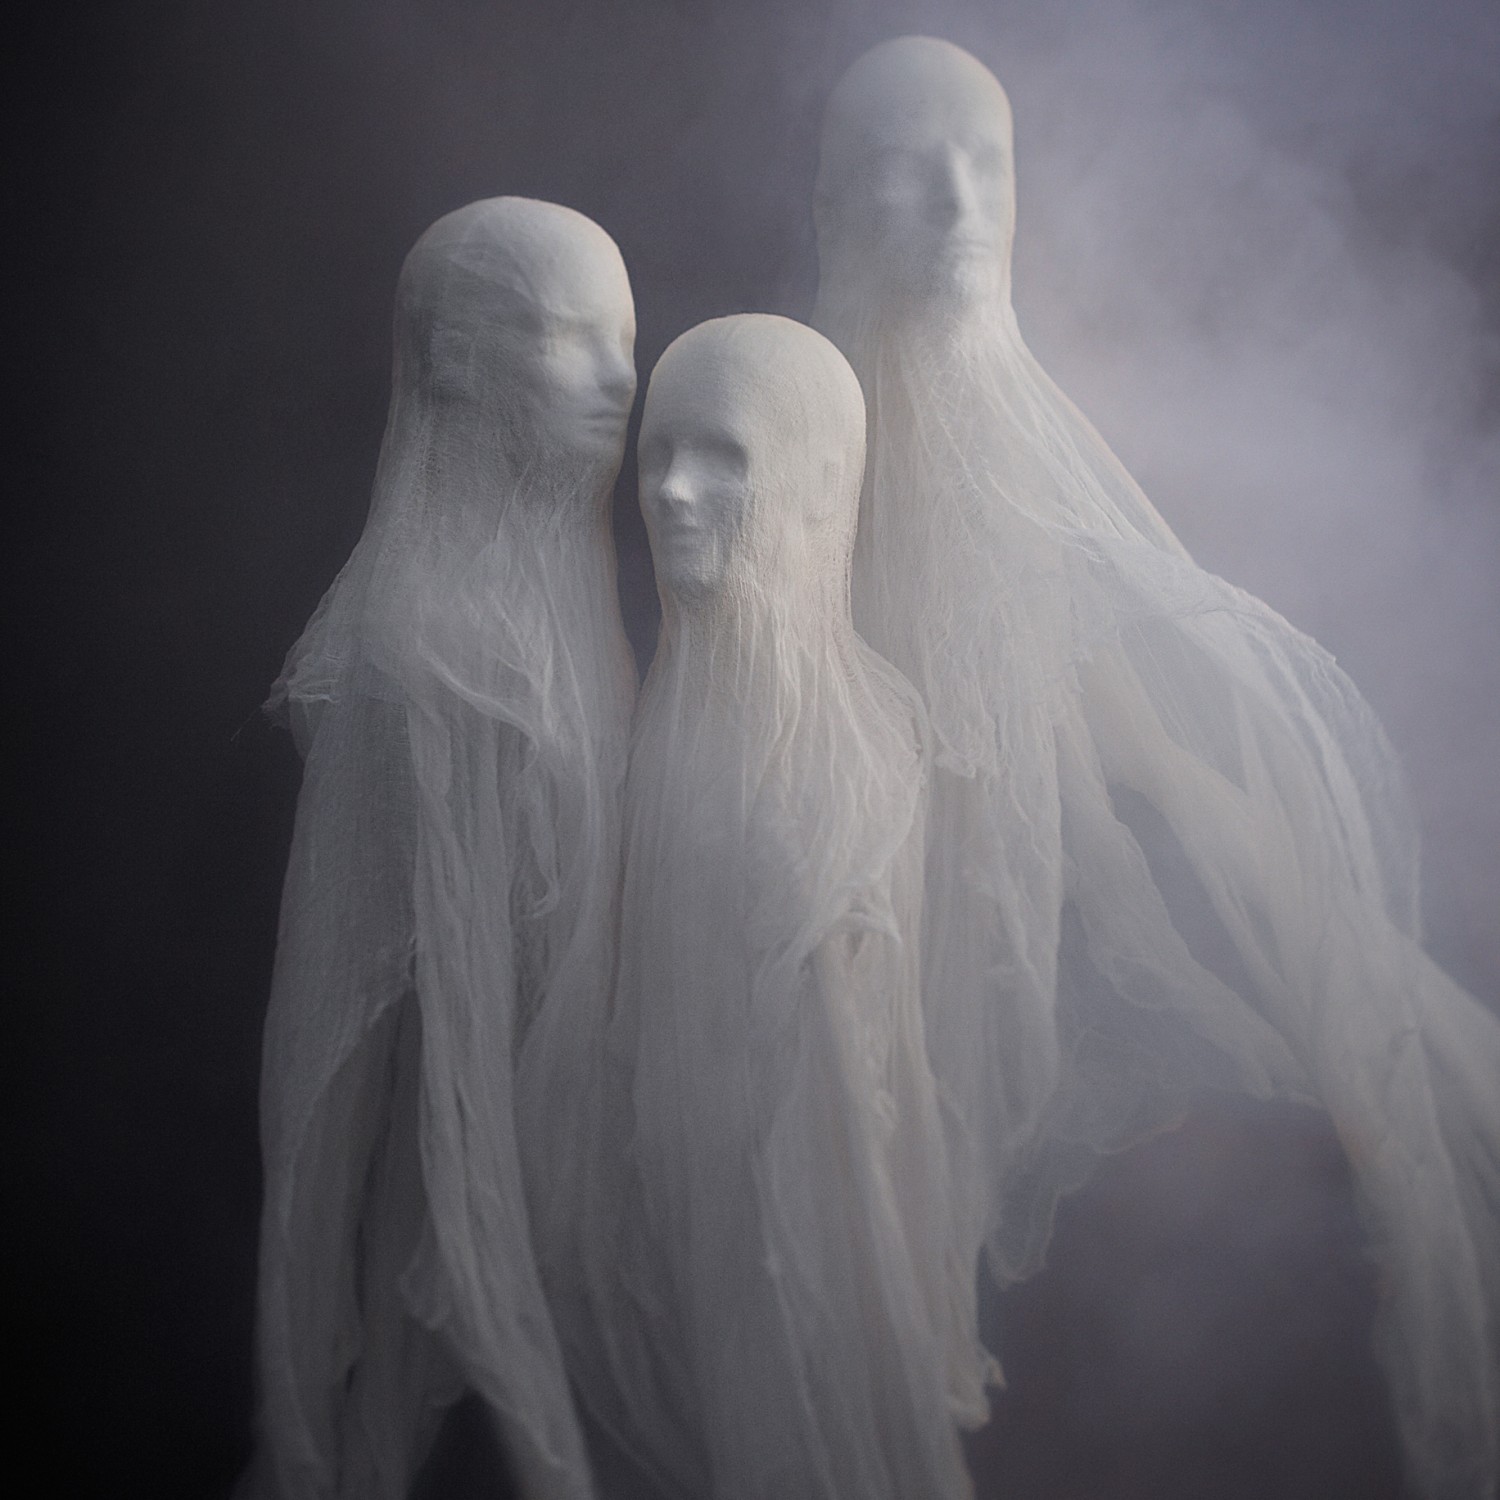 cloth-ghosts-phobias-1011mld107647_sq